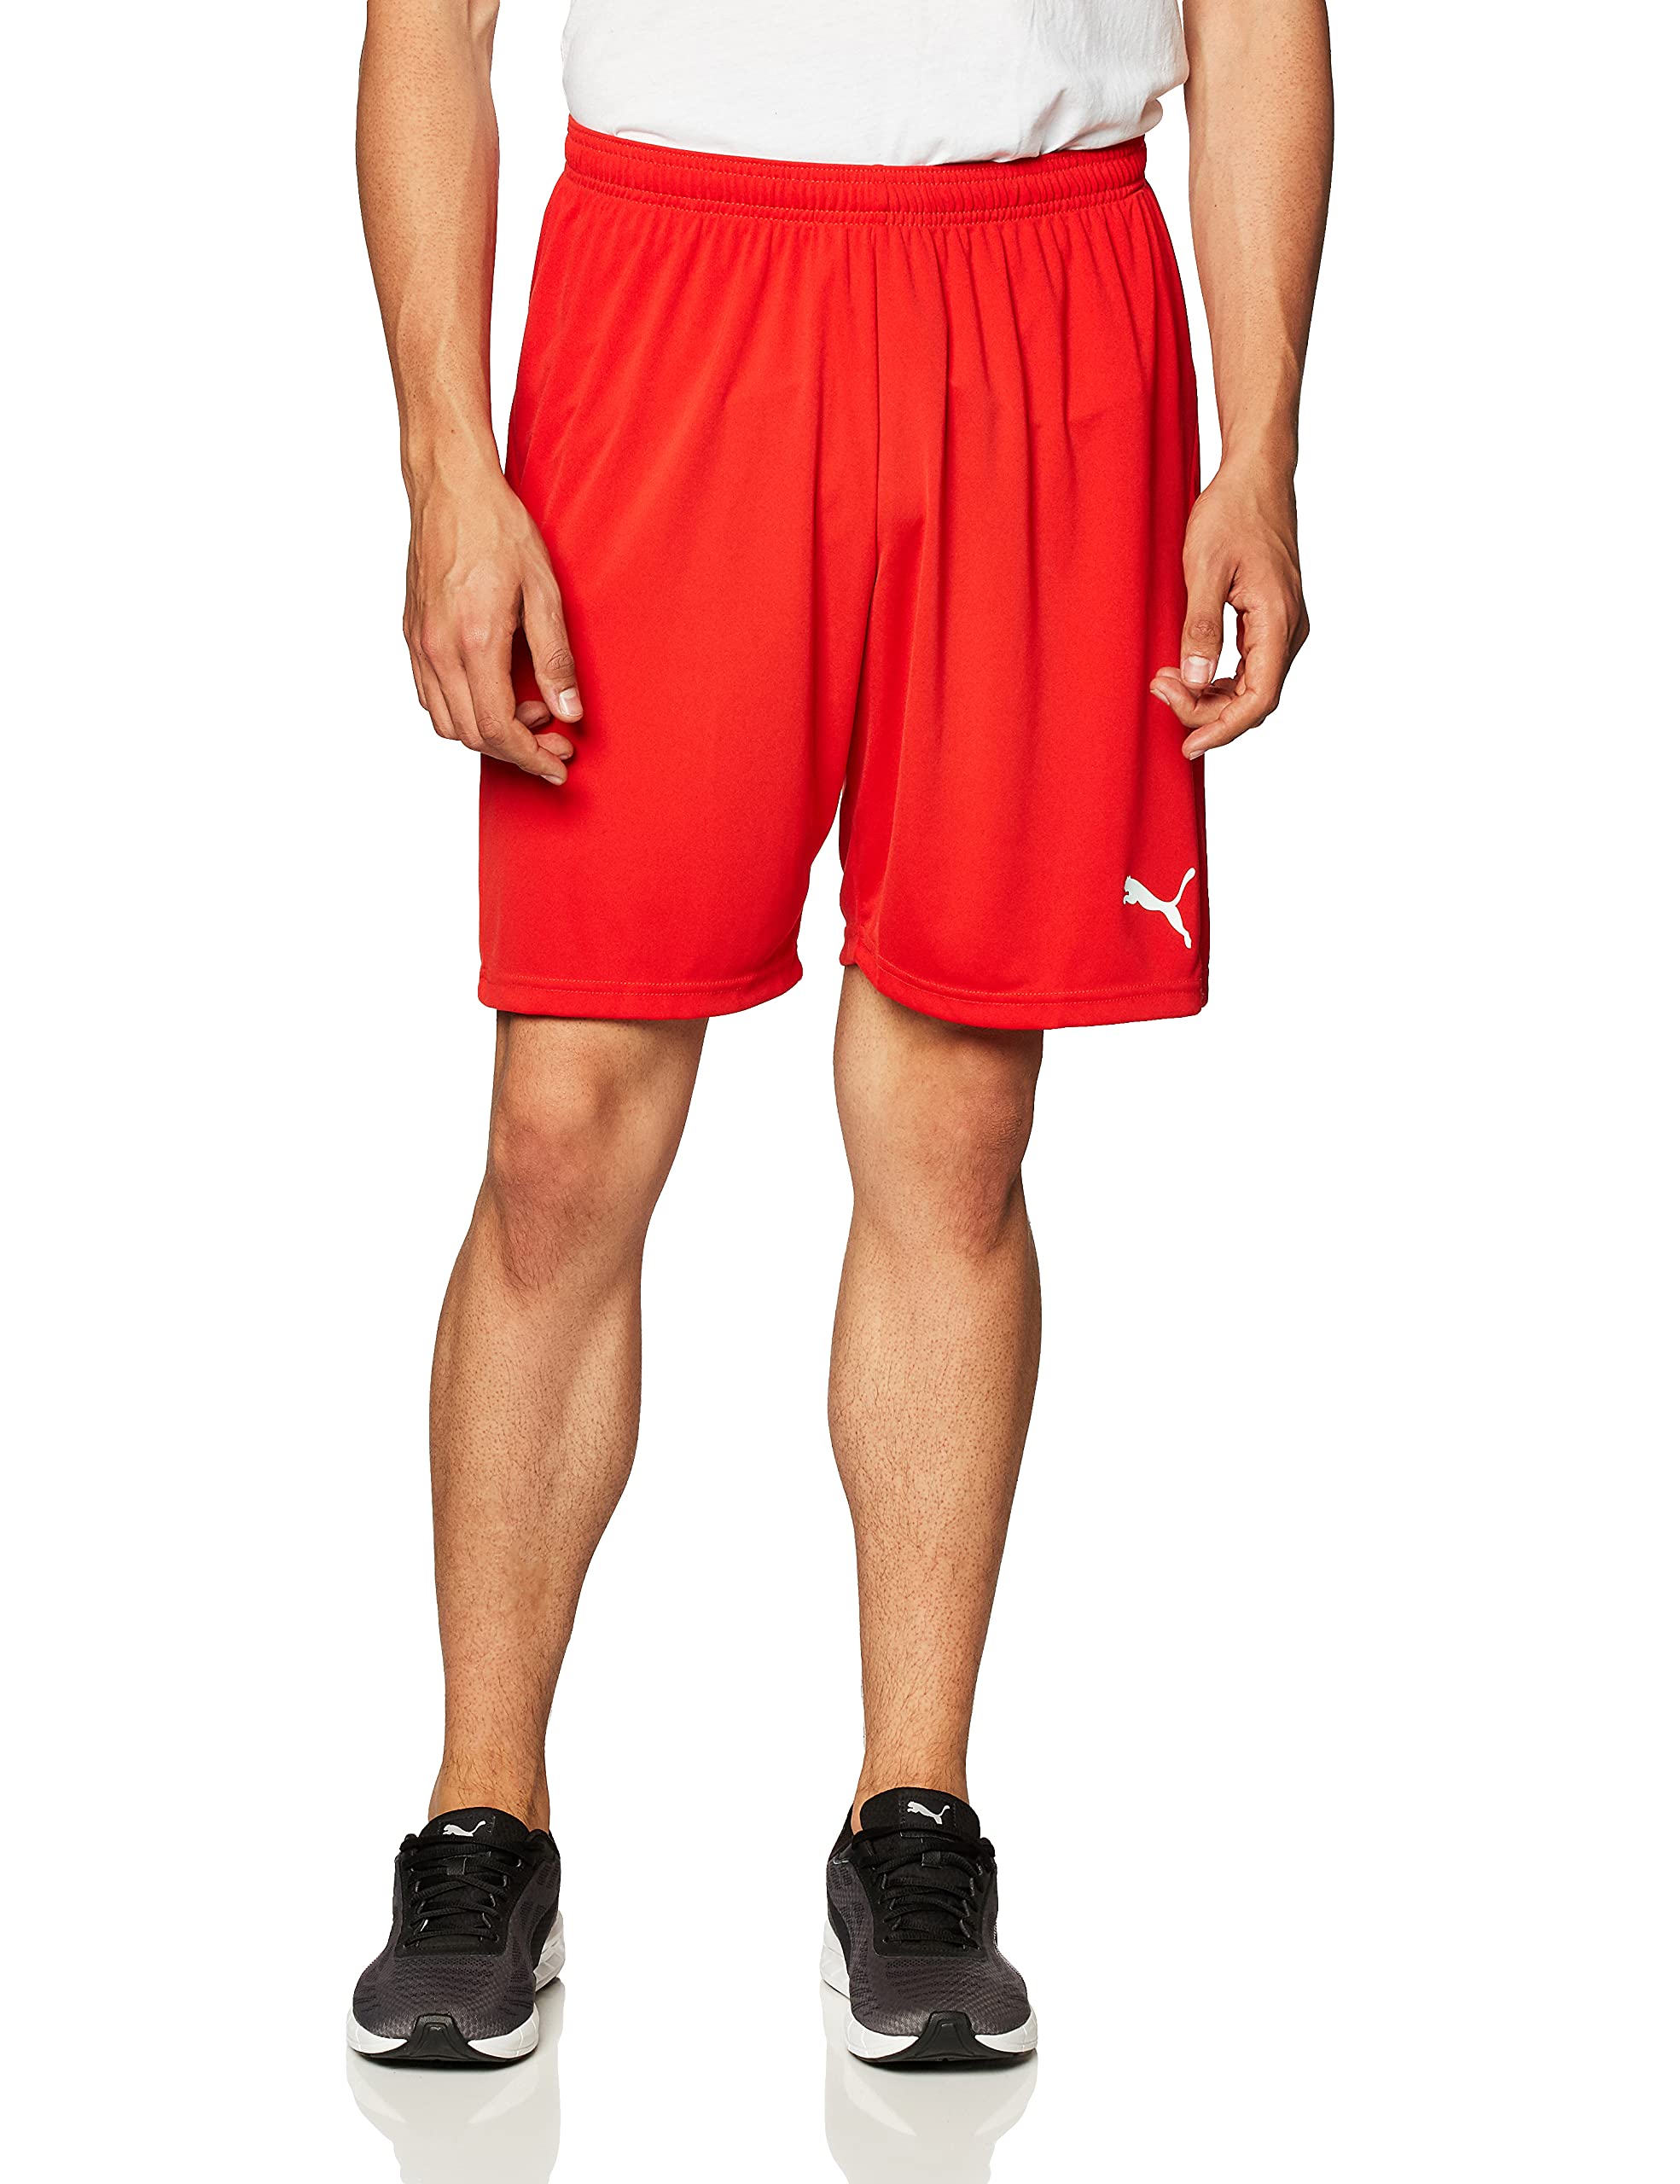 PUMA Mens Liga Core Shorts - Red/White - Small